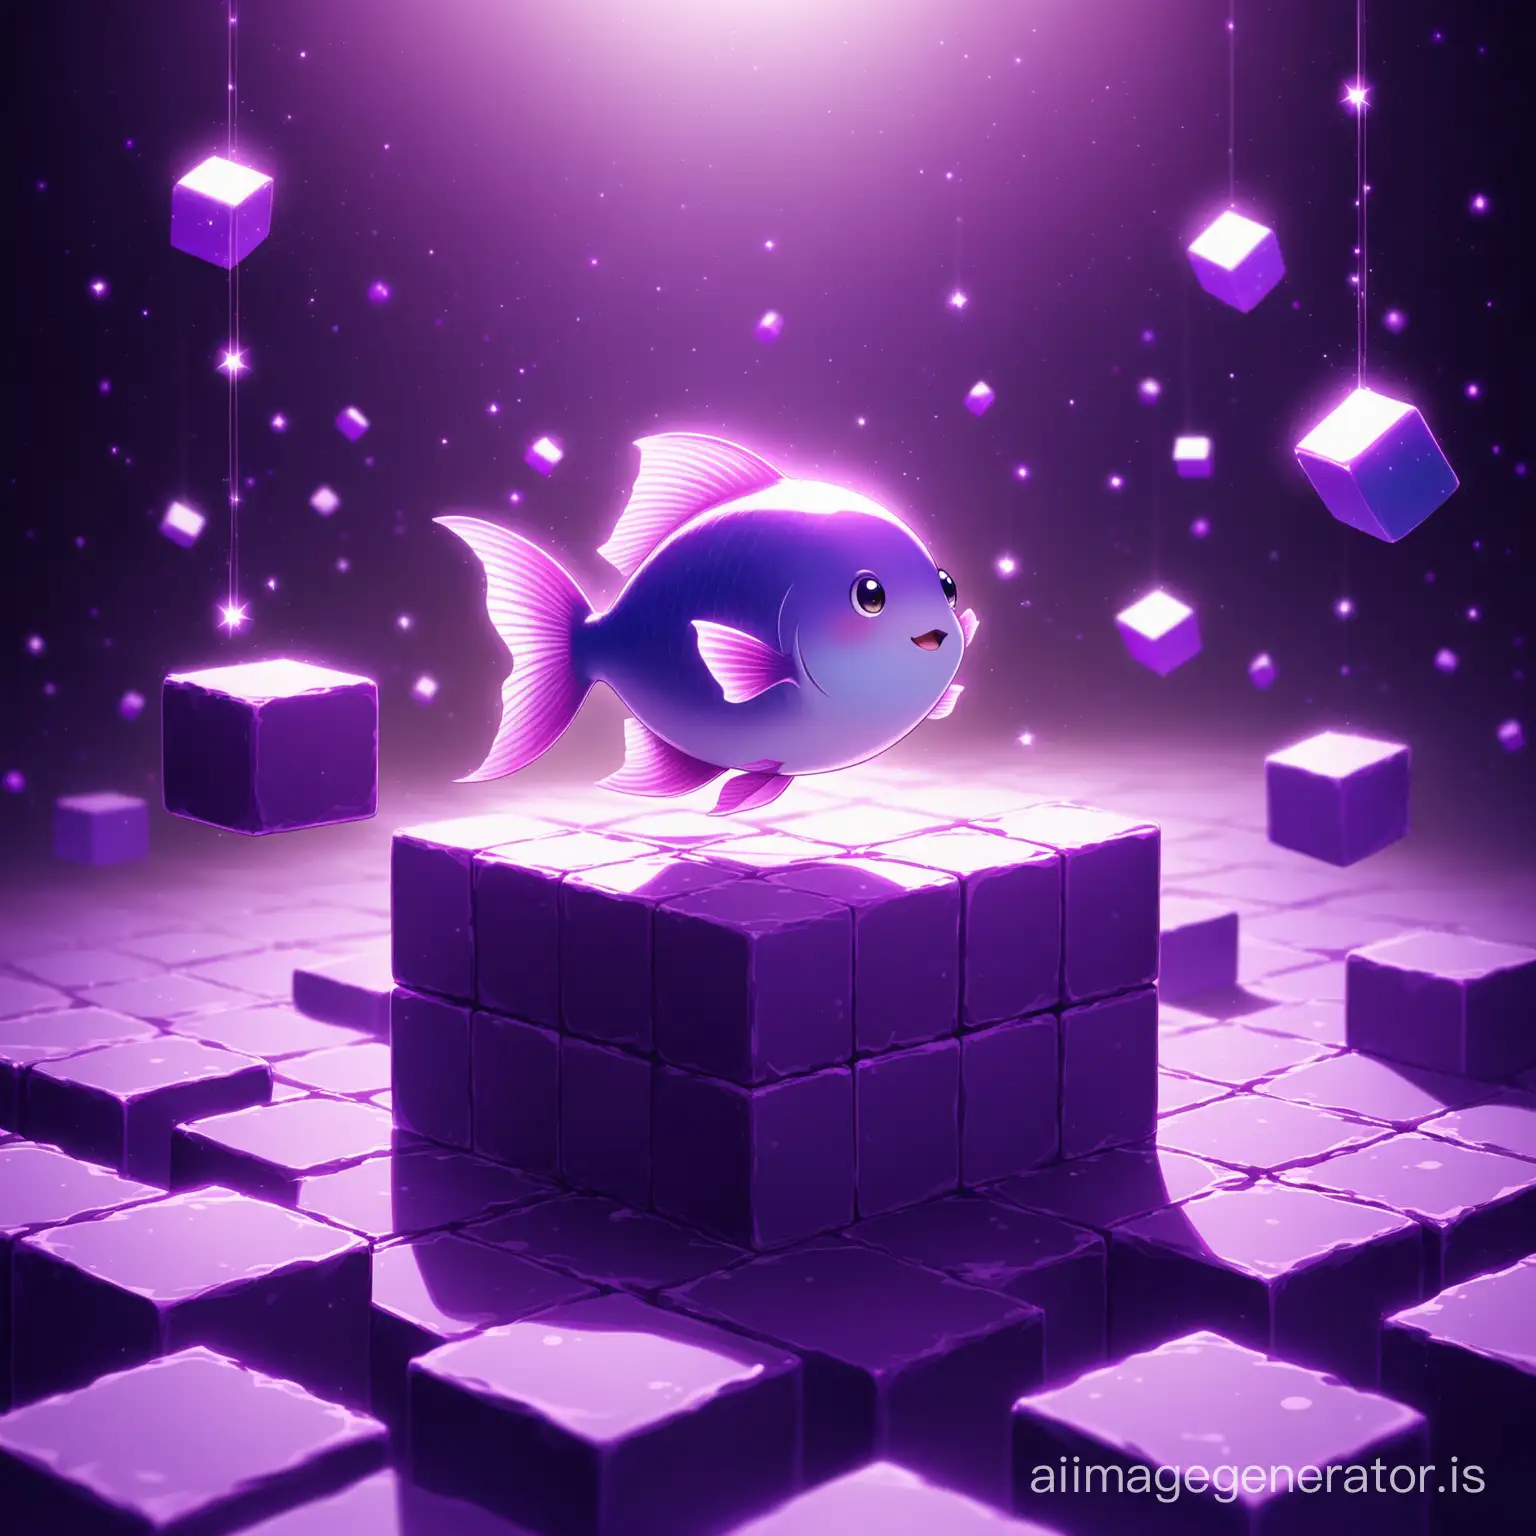 Flying-Cute-Fish-on-Purple-Block-Earth